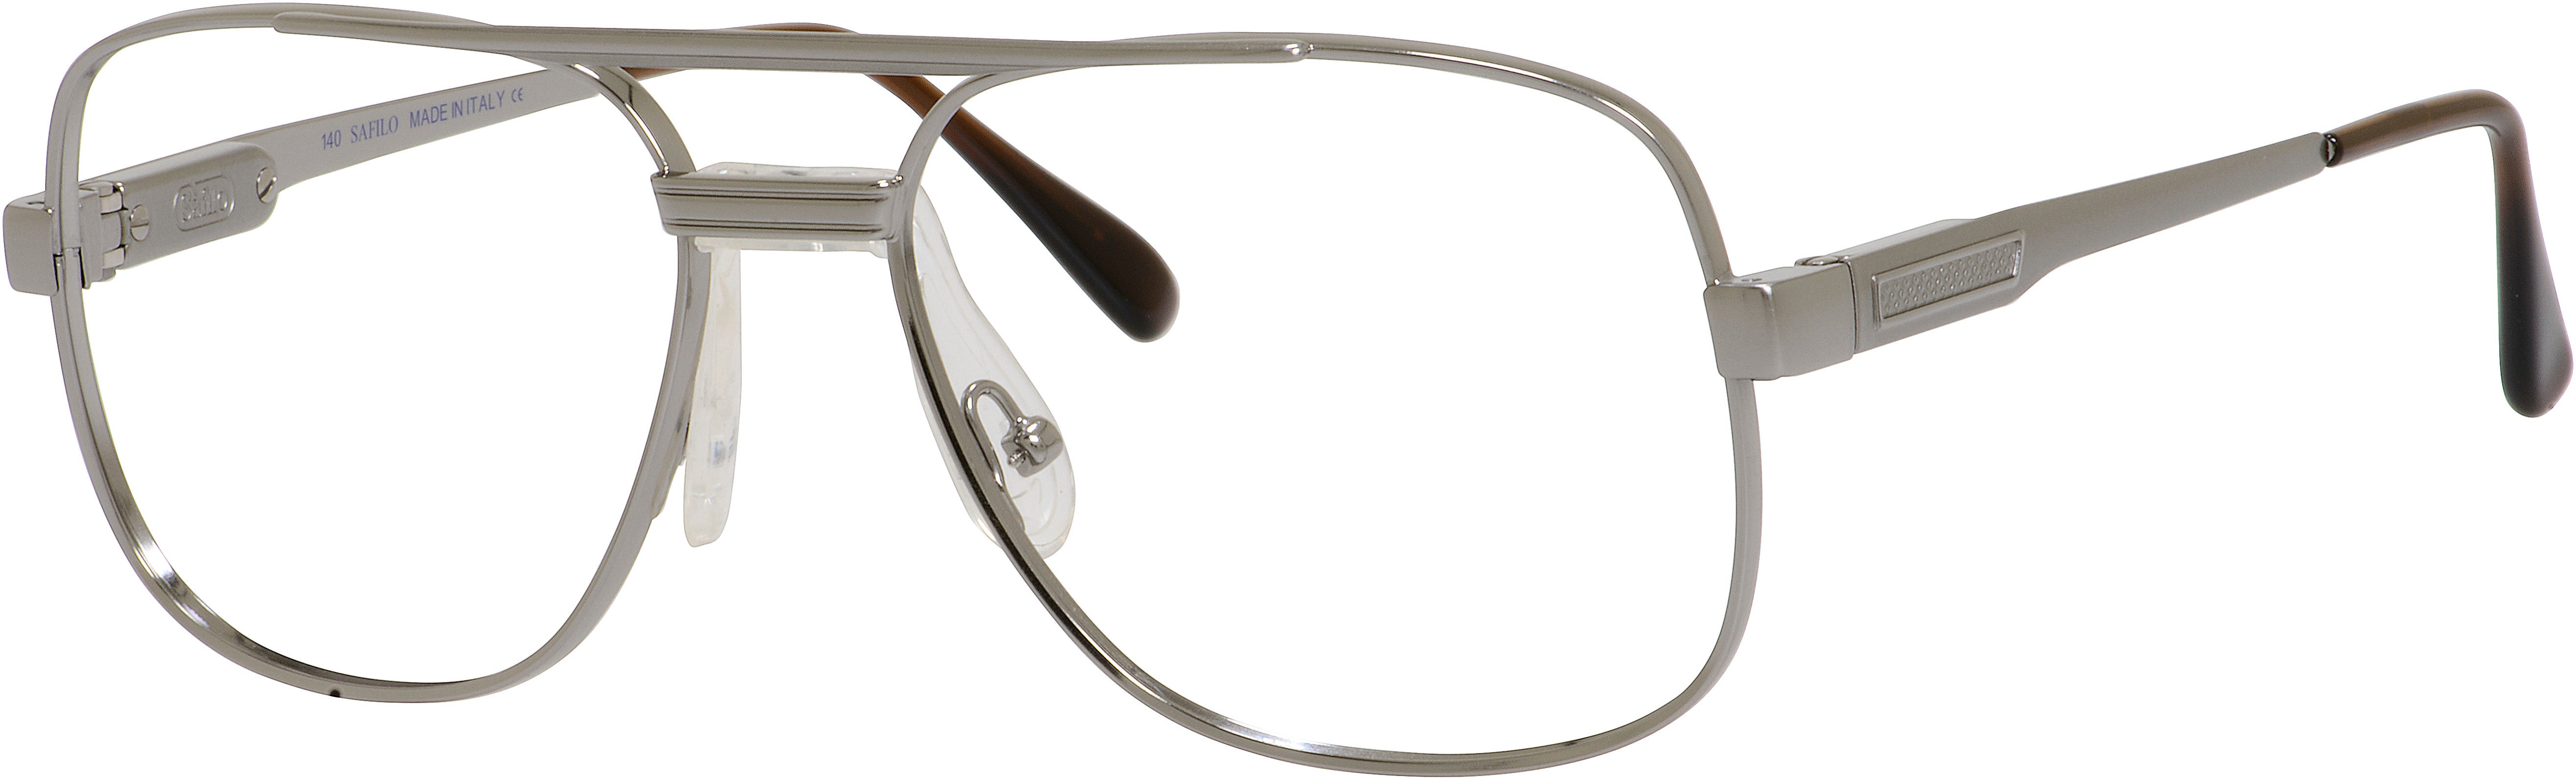  Elasta 3060 Rectangular Eyeglasses 0014-0014  Safinox (00 Demo Lens)